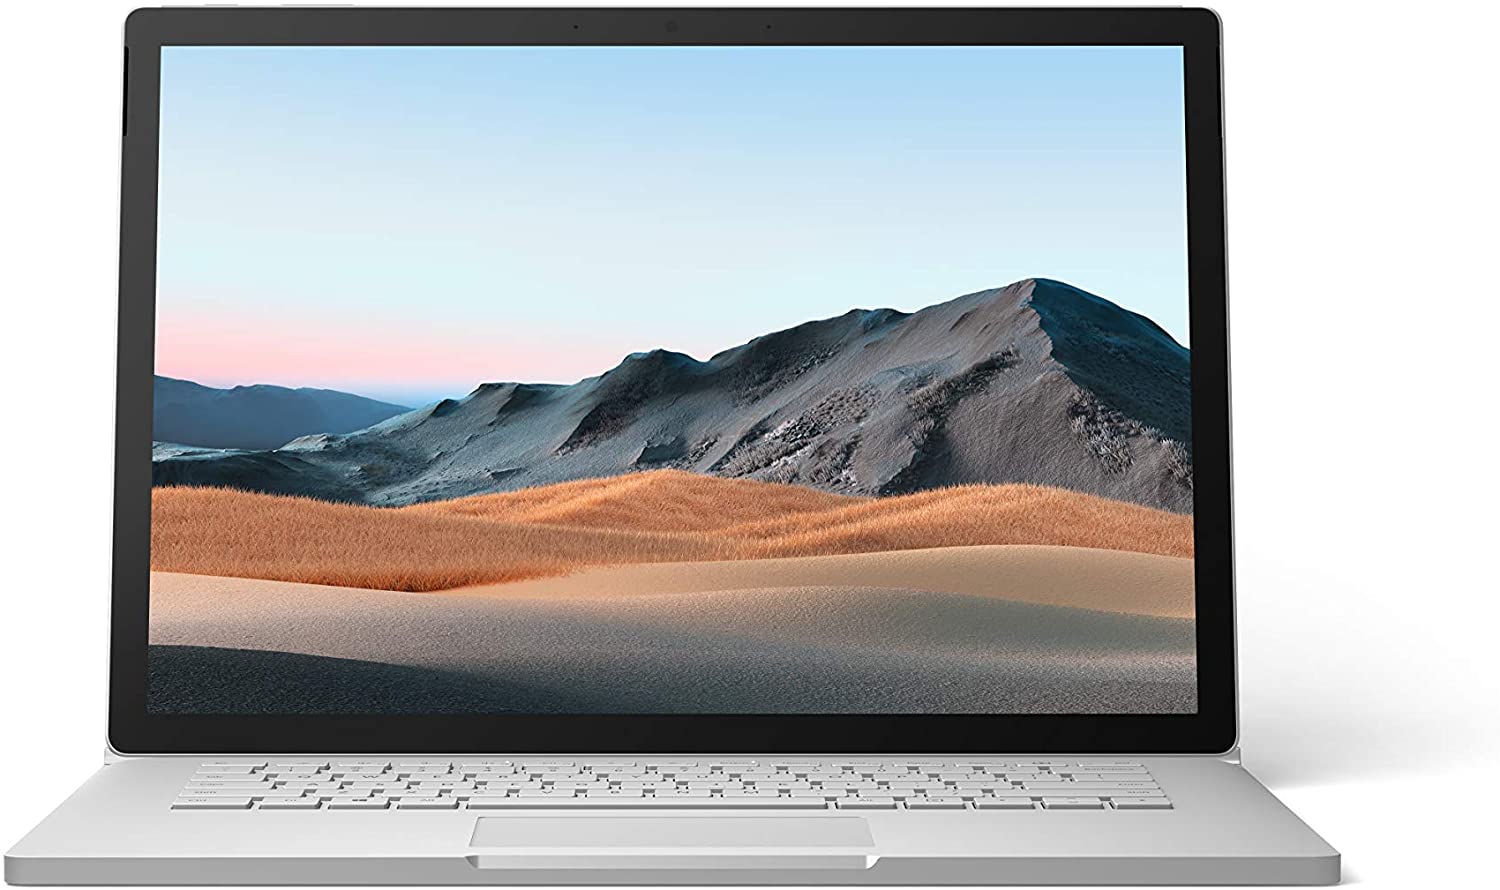 Ultrabook Microsoft Surface Book 3 13.5" Touch Intel Core i5-1035G7 RAM 8GB SSD 256GB Windows 10 Home Platinum